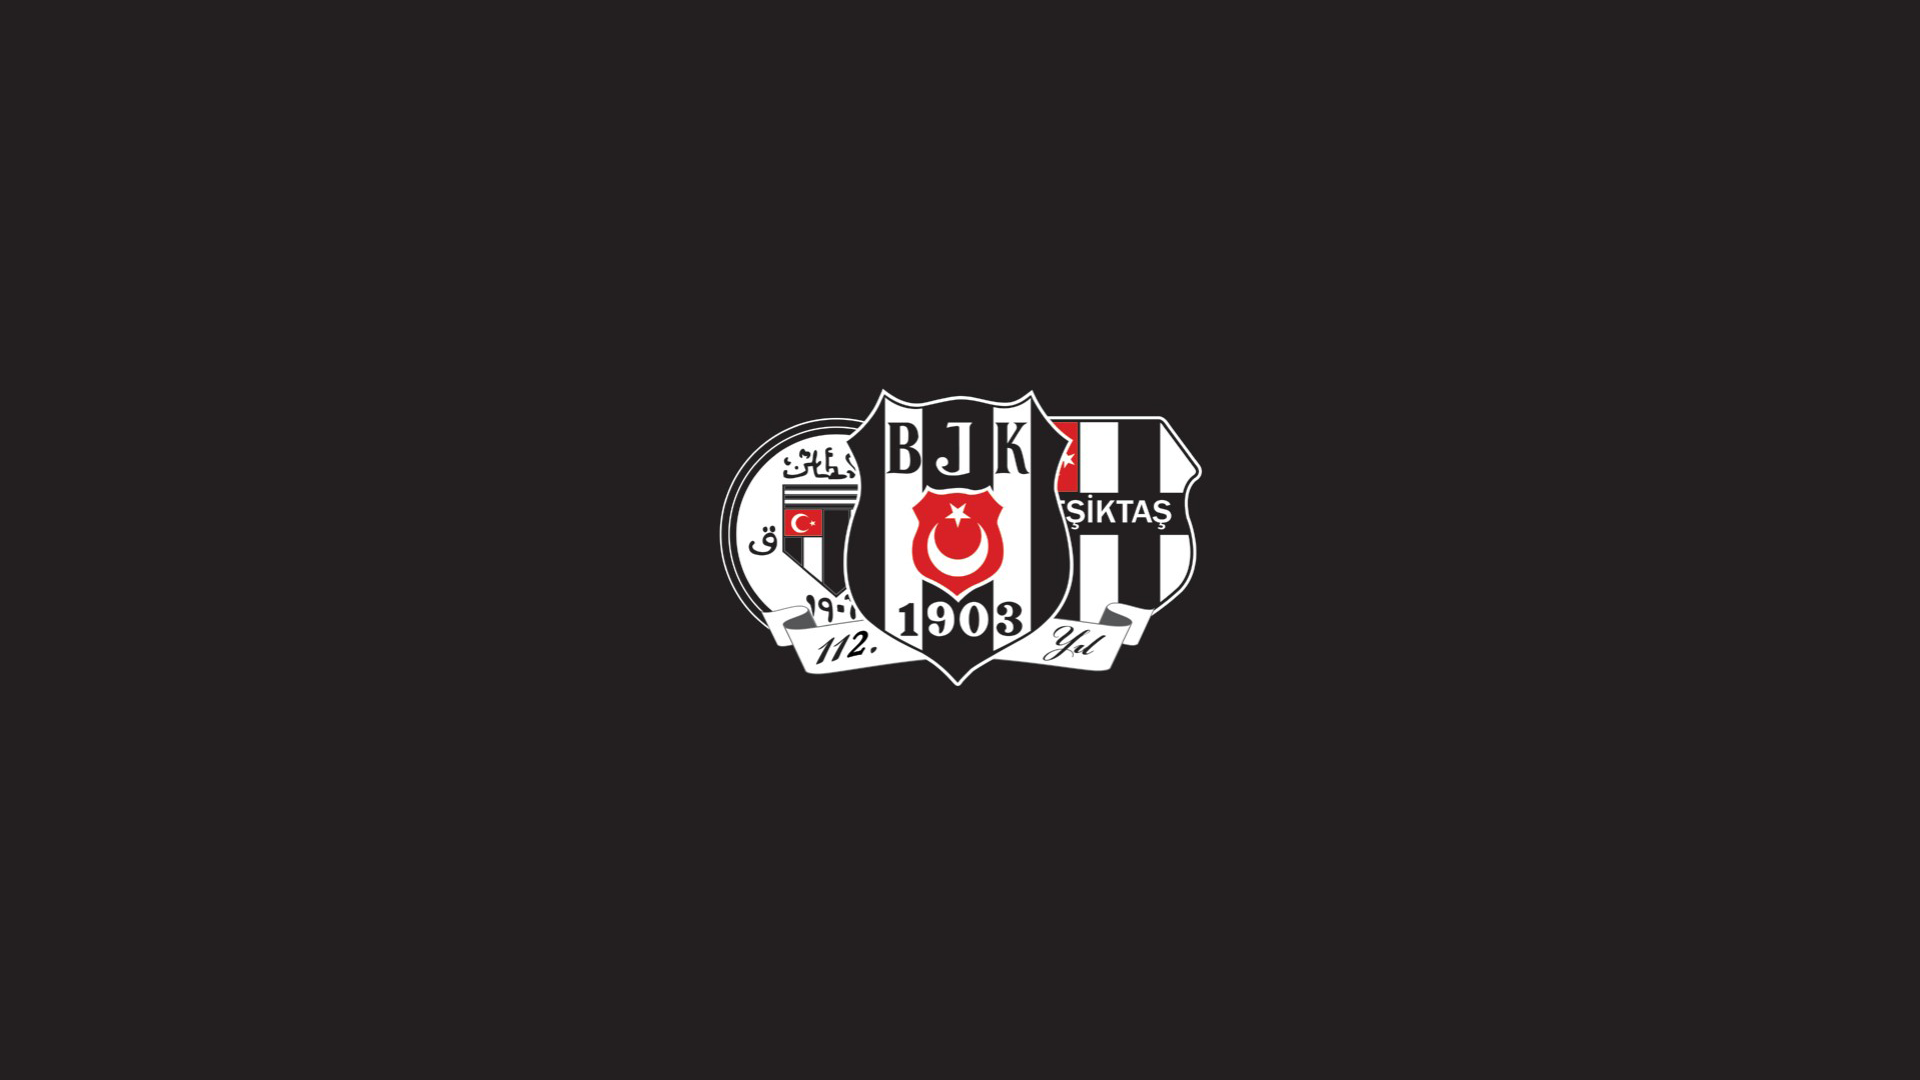 General 1920x1080 Besiktas J.K. Karakartal 1903 (year) Sport Club logo black background simple background soccer clubs